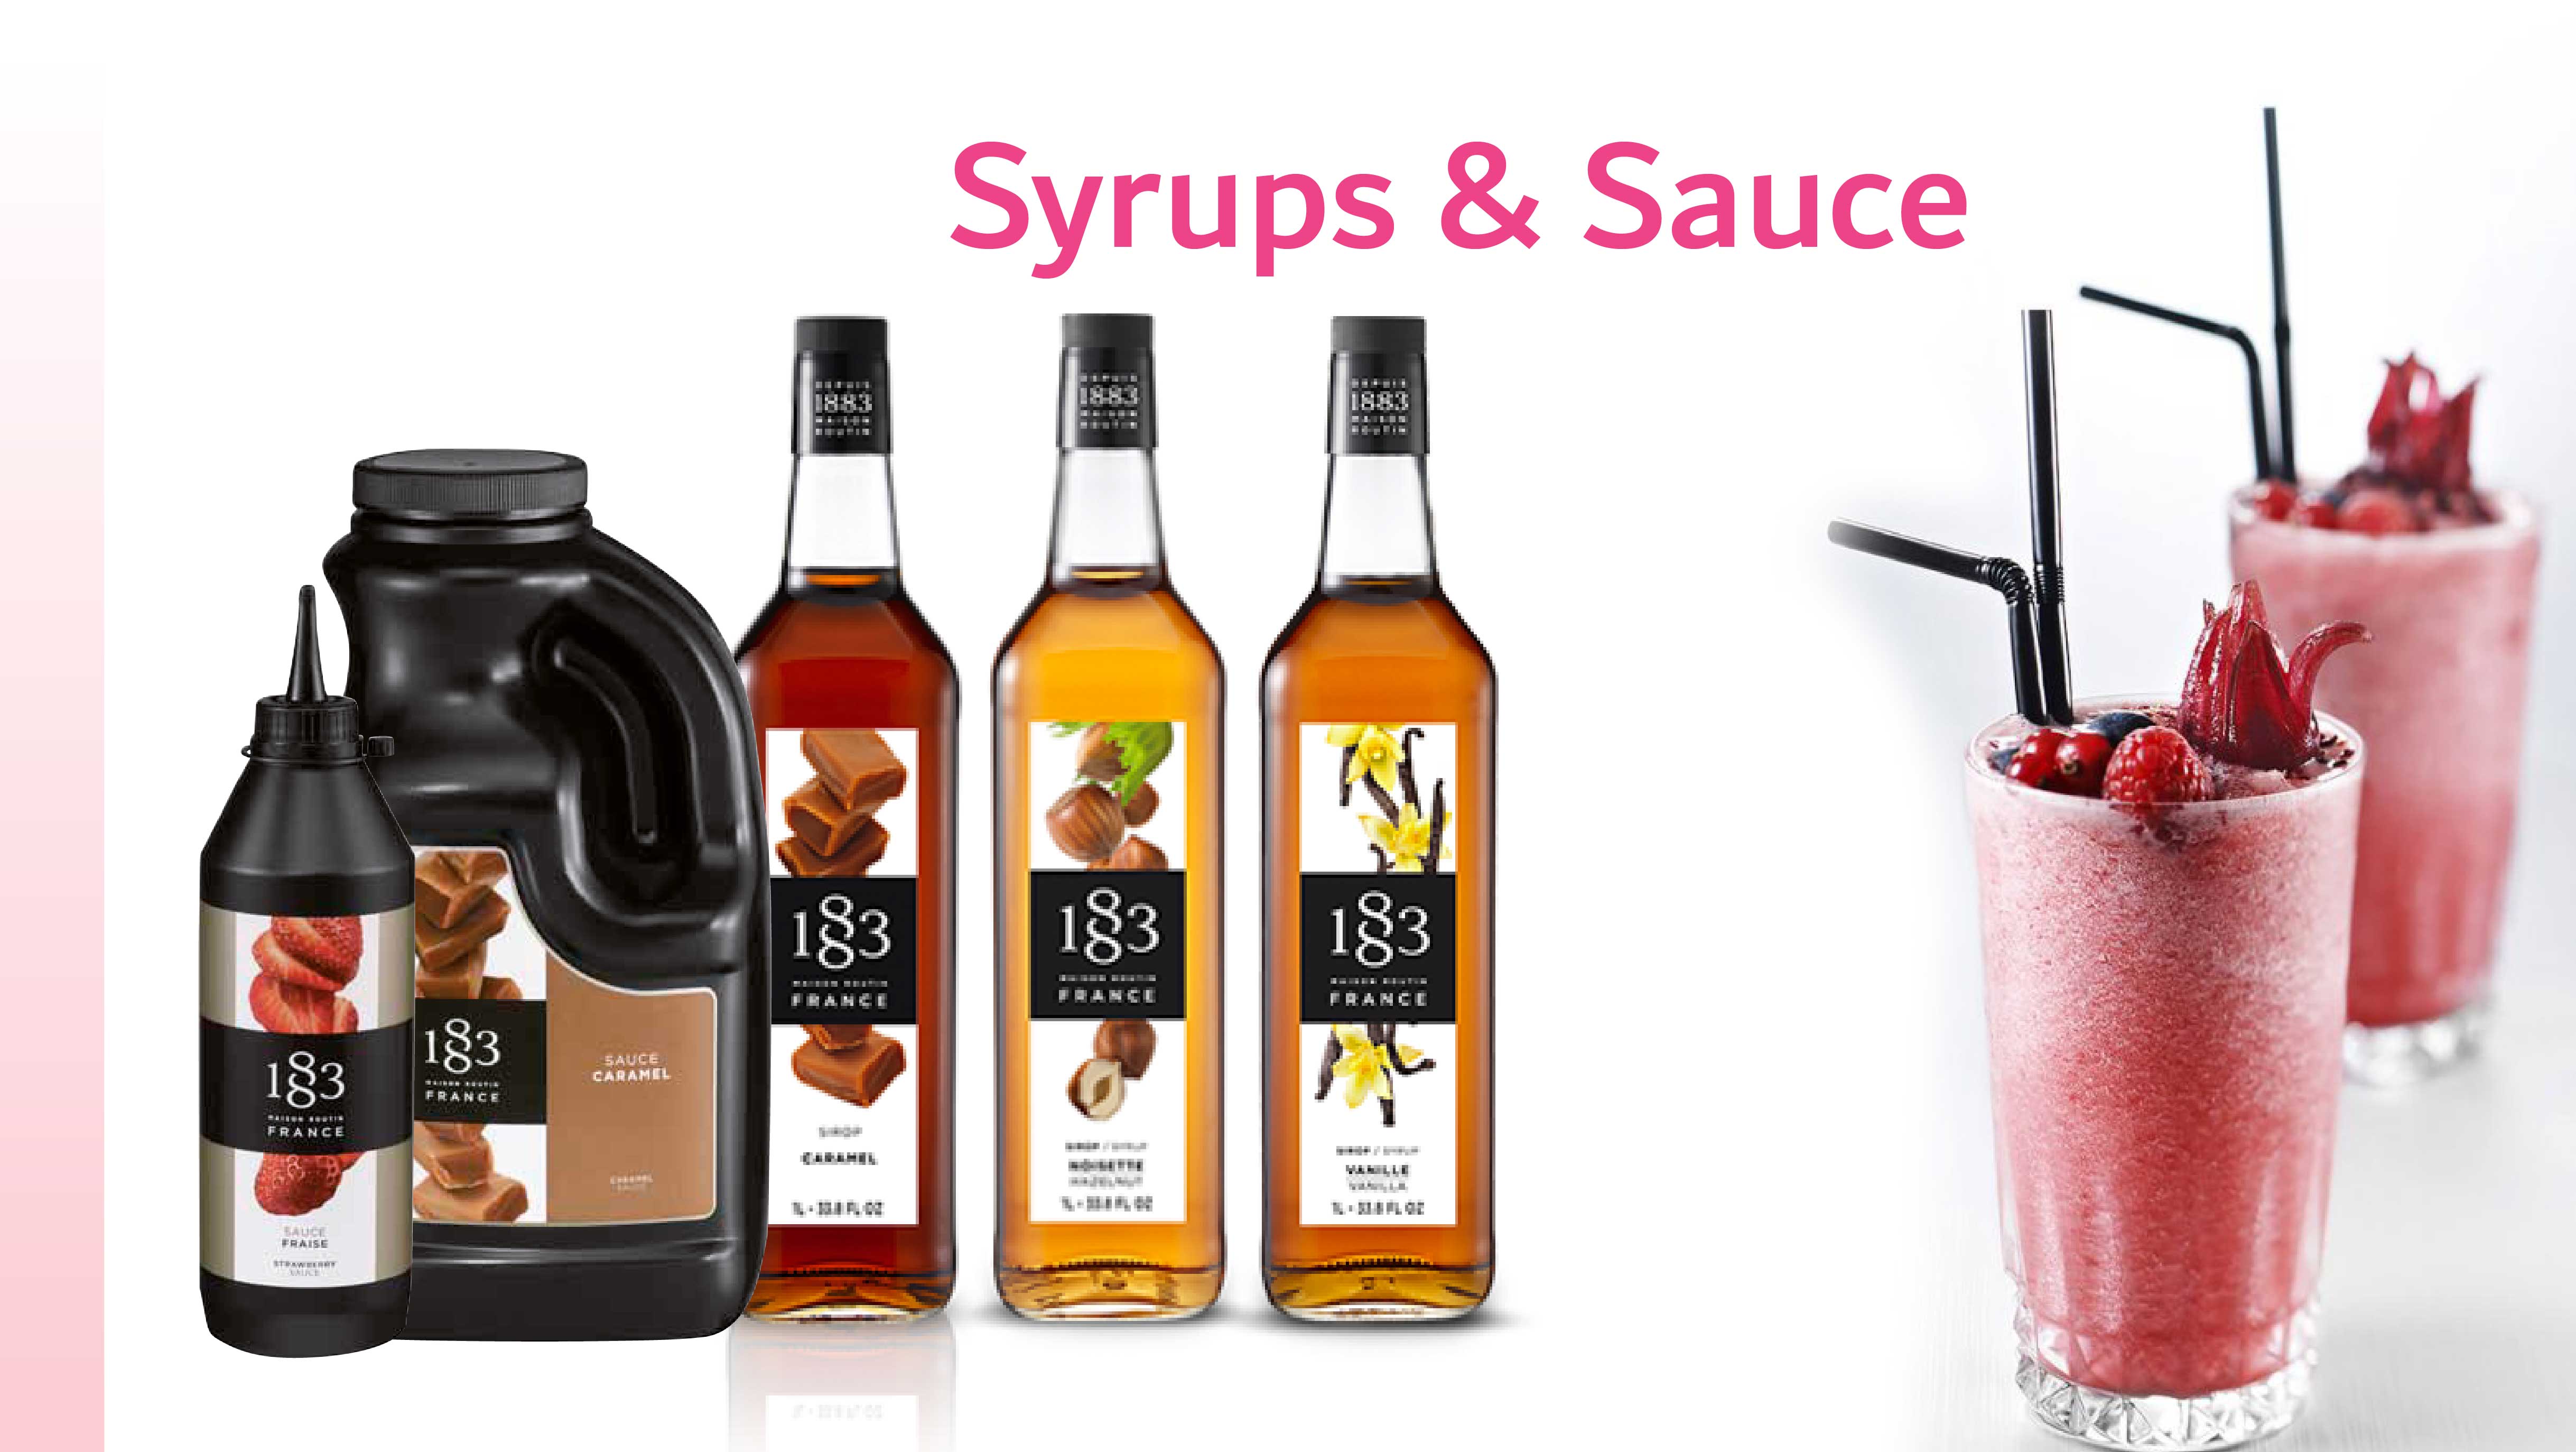  Syrups & Sauce